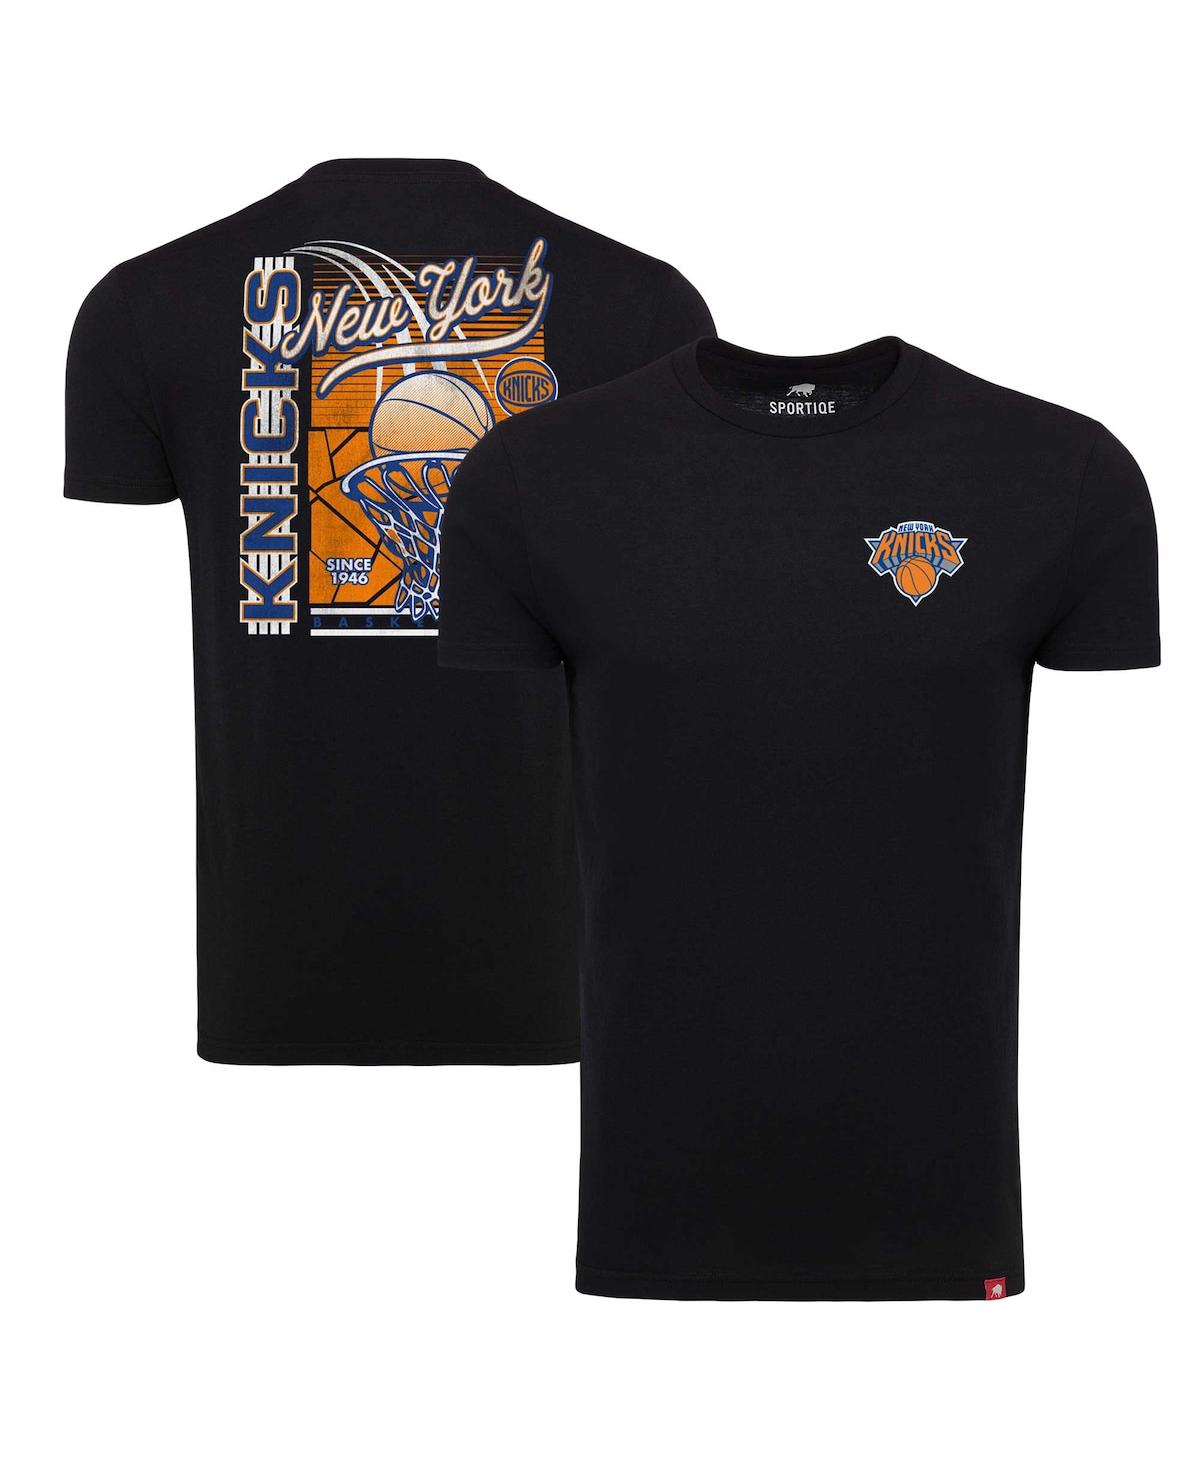 Sportiqe Men's Black New York Knicks Comfy Tri-blend T-shirt